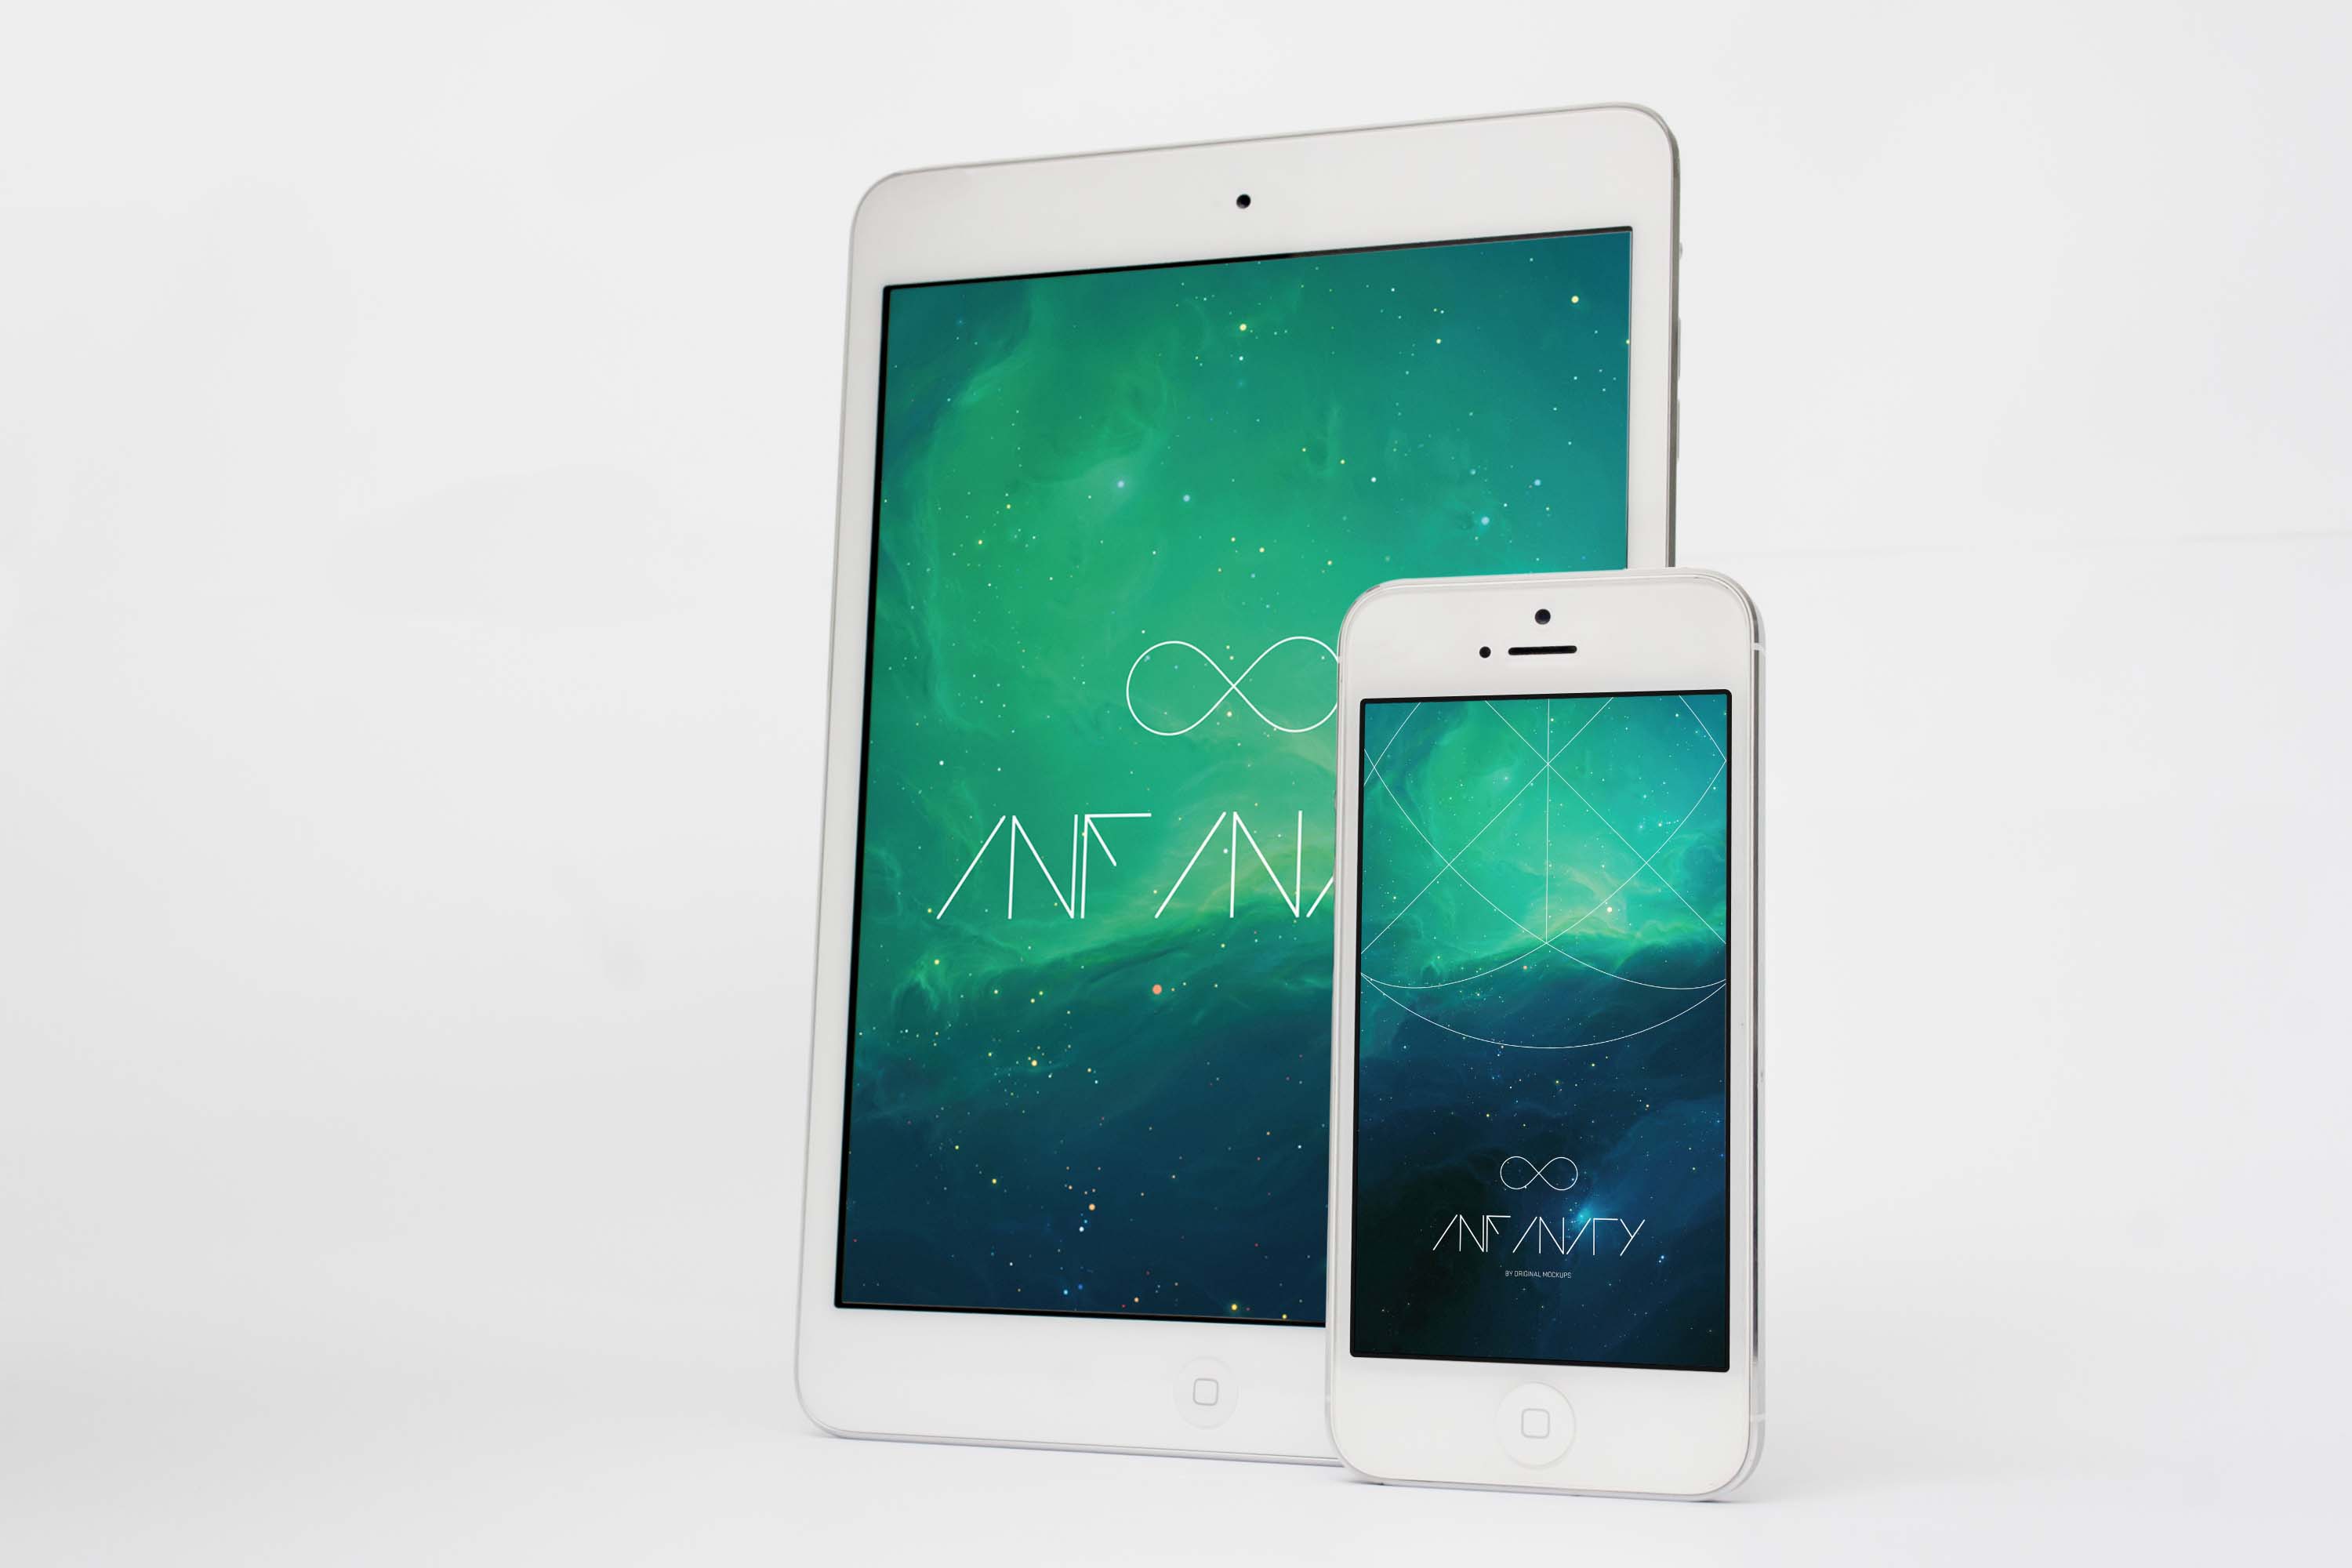 iPhone &amp; iPad Mockup 2 .jpg